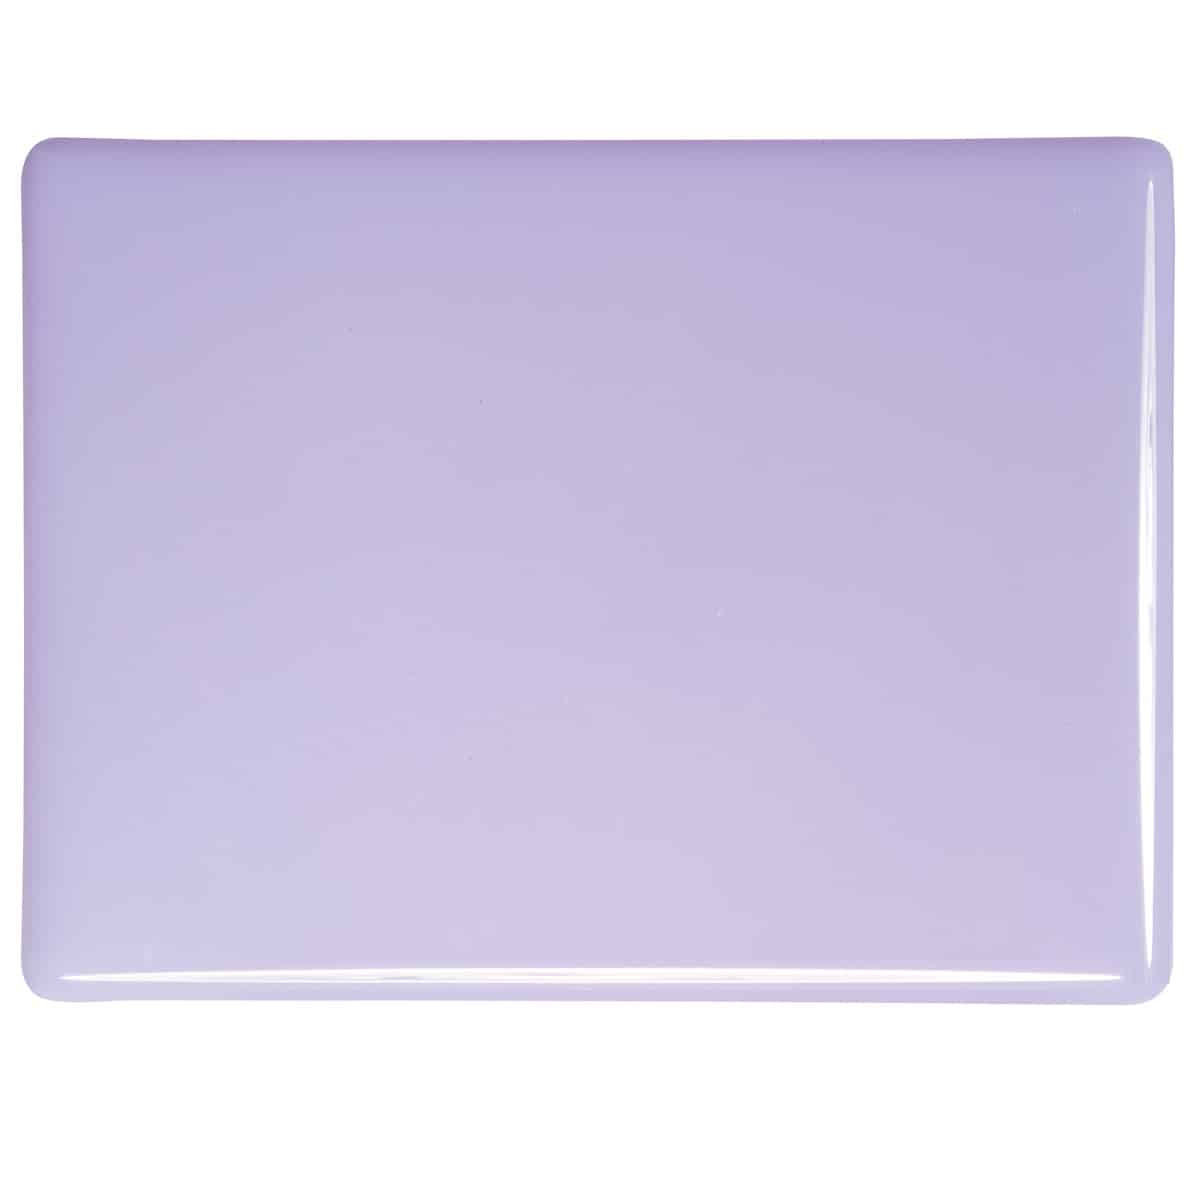 000142 Neo-lavender Opalescent